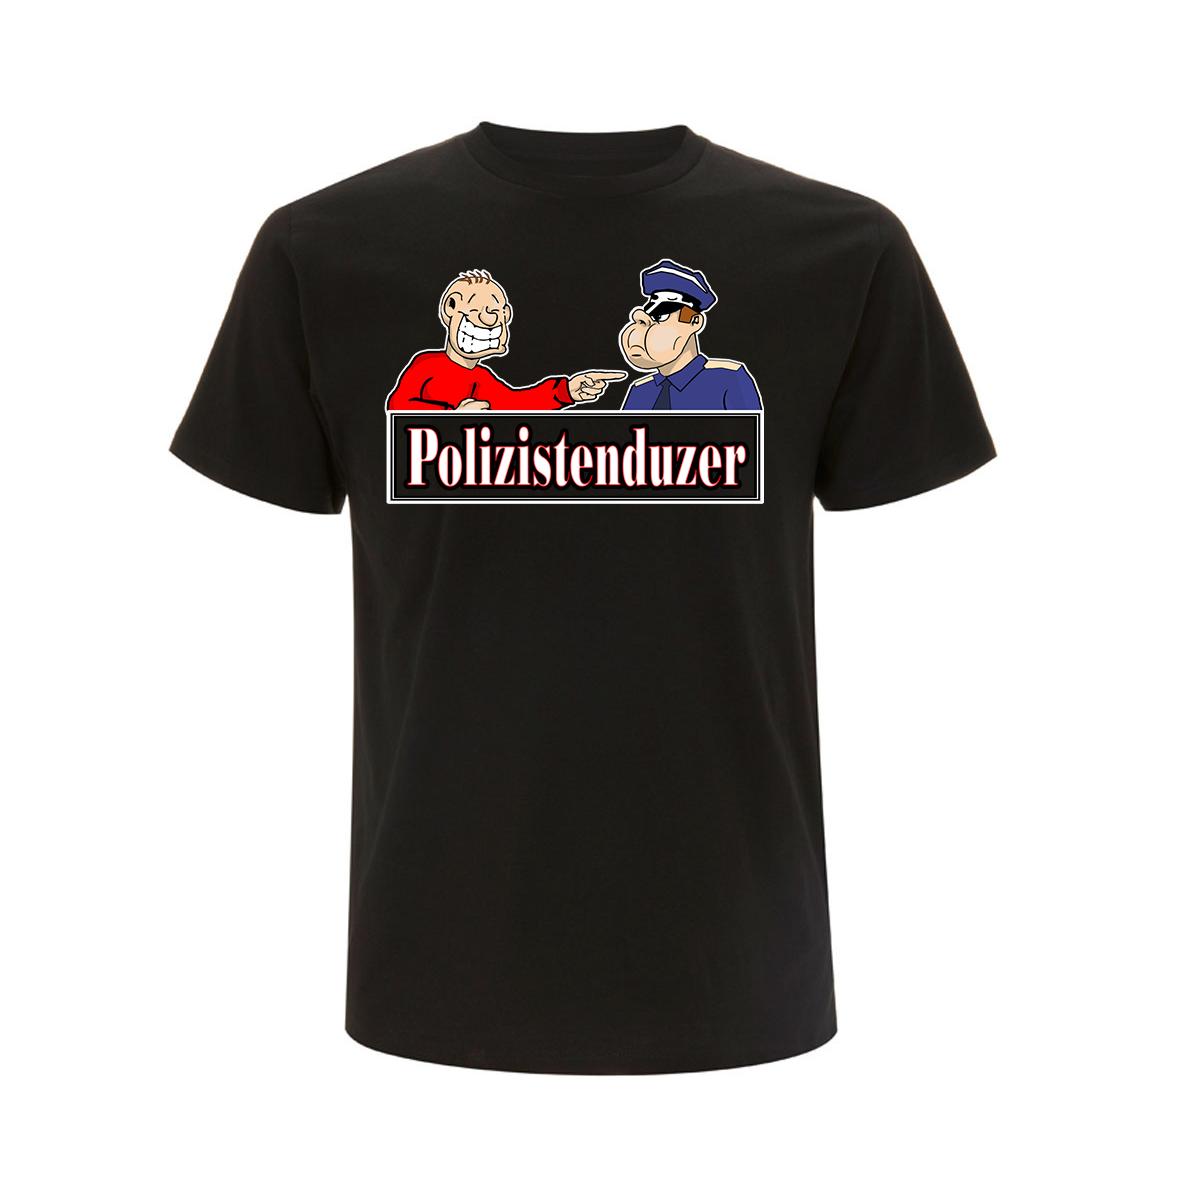 Polizistenduzer - Männer T-Shirt - schwarz